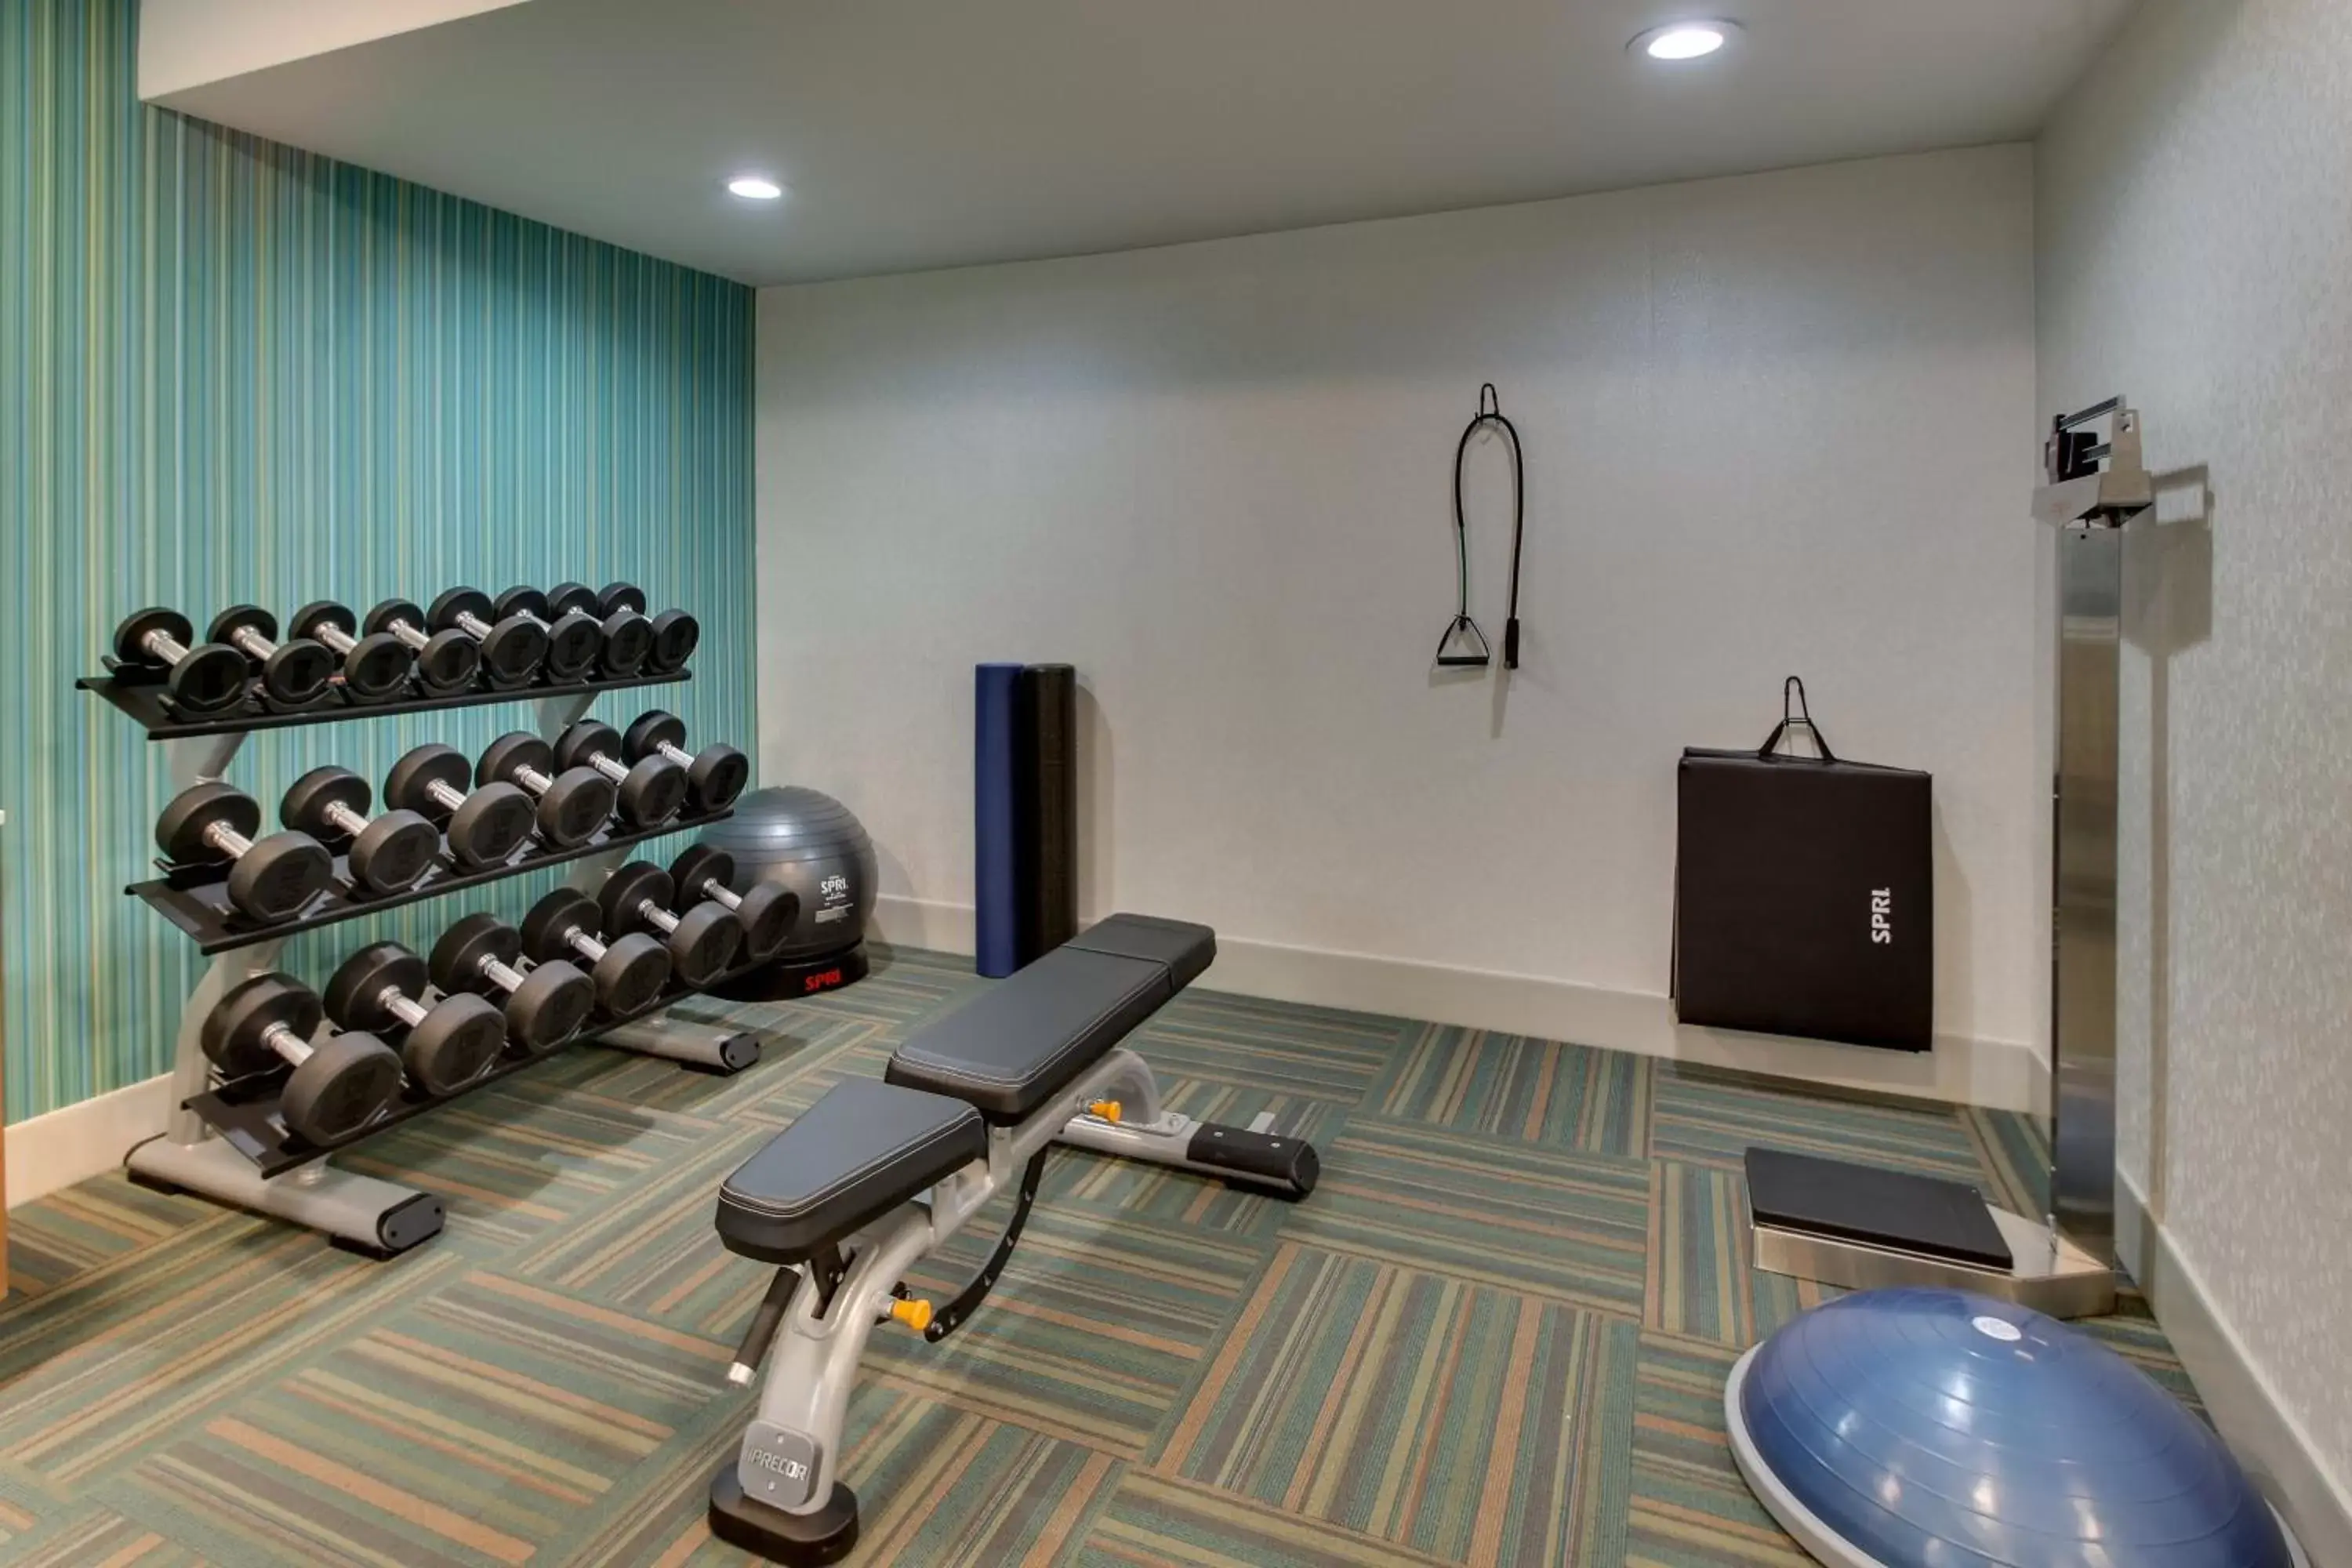 Fitness centre/facilities, Fitness Center/Facilities in Holiday Inn Express Pittston - Scranton Airport, an IHG Hotel